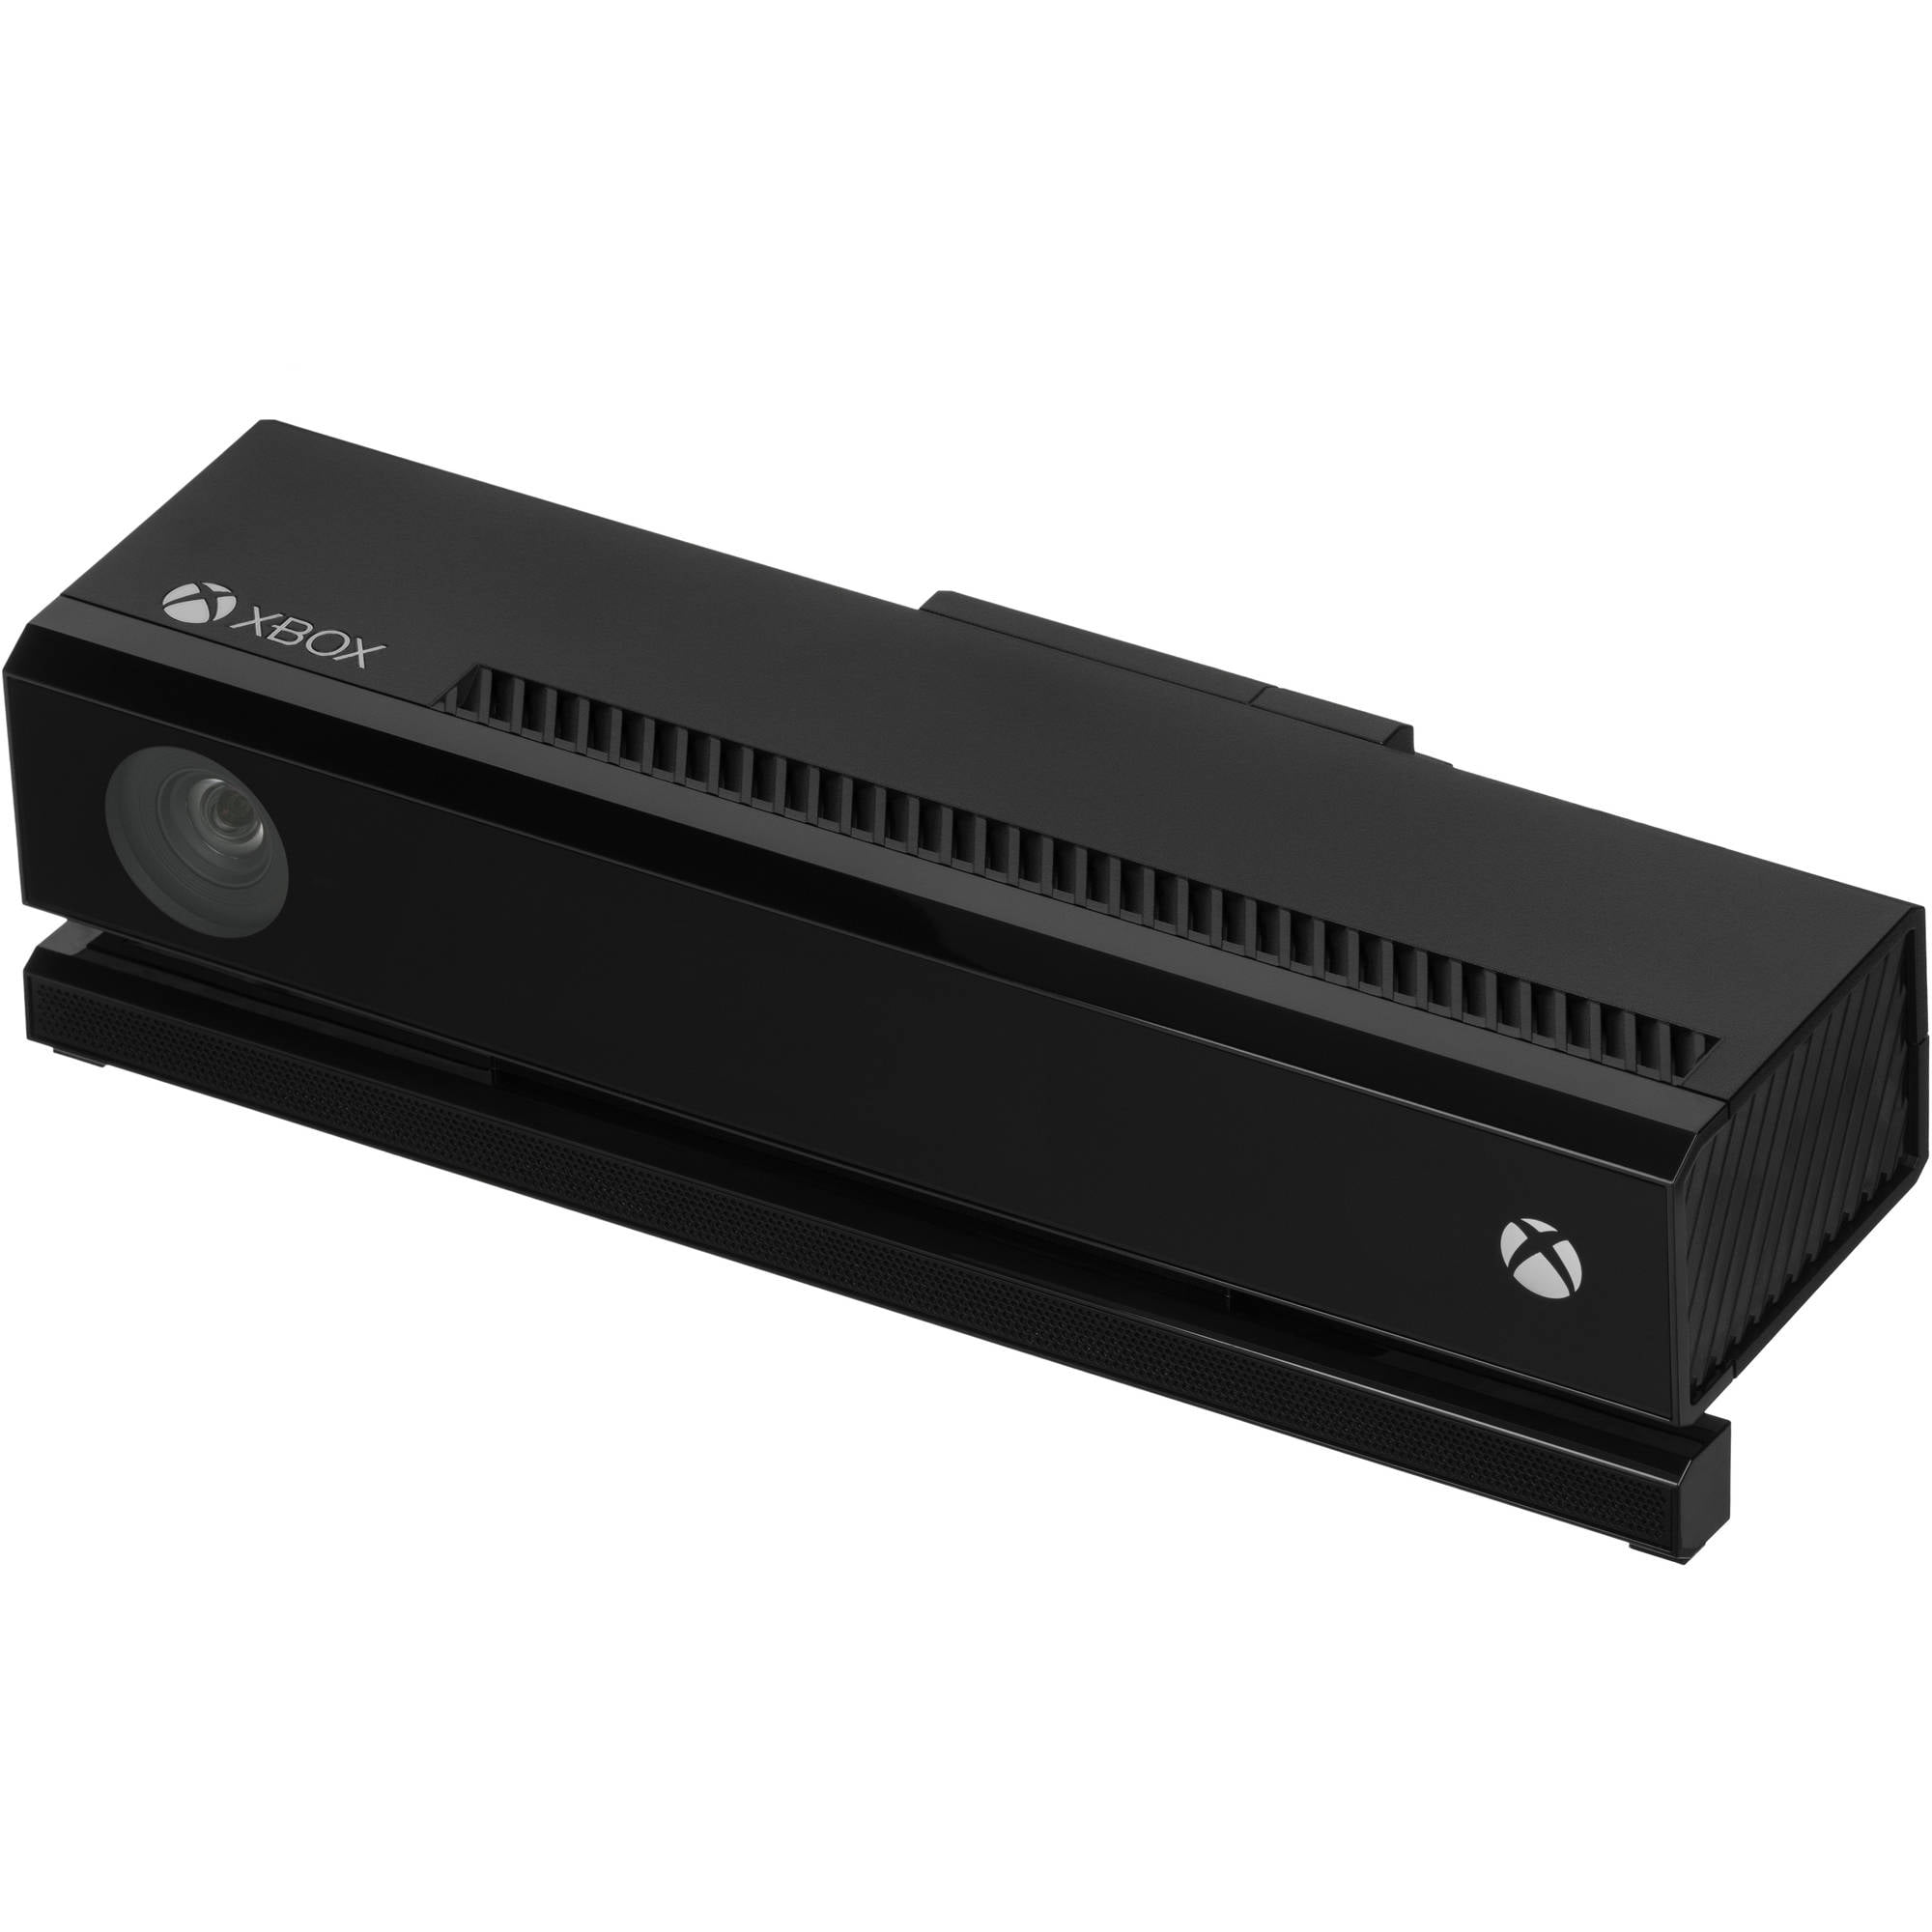 Xbox One S Completo 4K Bivolt + 2 Controles Xbox Wireless+ Sensor Kinect +  10 jogos / Frete Grátis !!